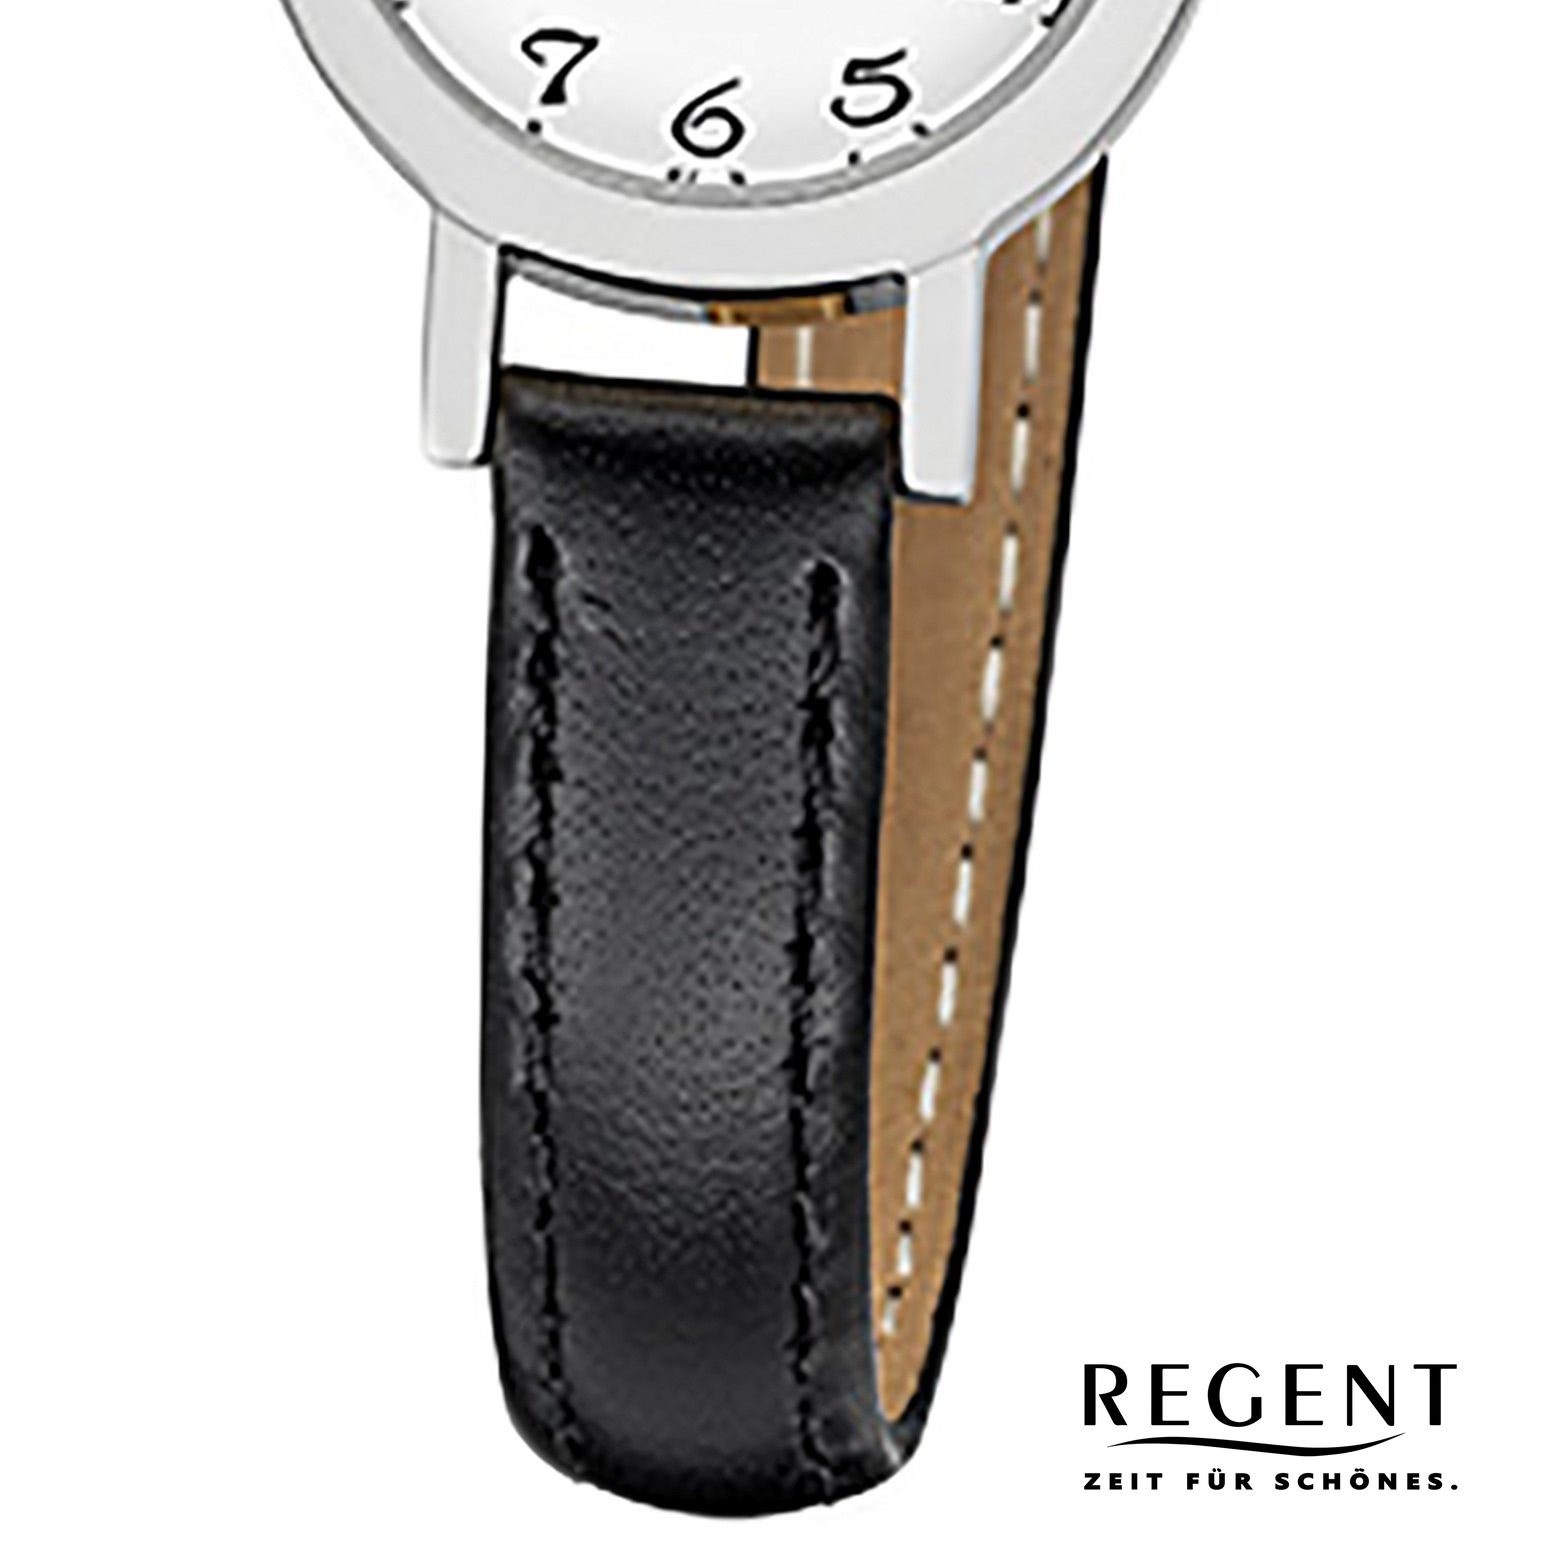 rund, Damen Quarzuhr (ca. schwarz Lederarmband Damen-Armbanduhr 20mm), Armbanduhr Analog, klein Regent Regent